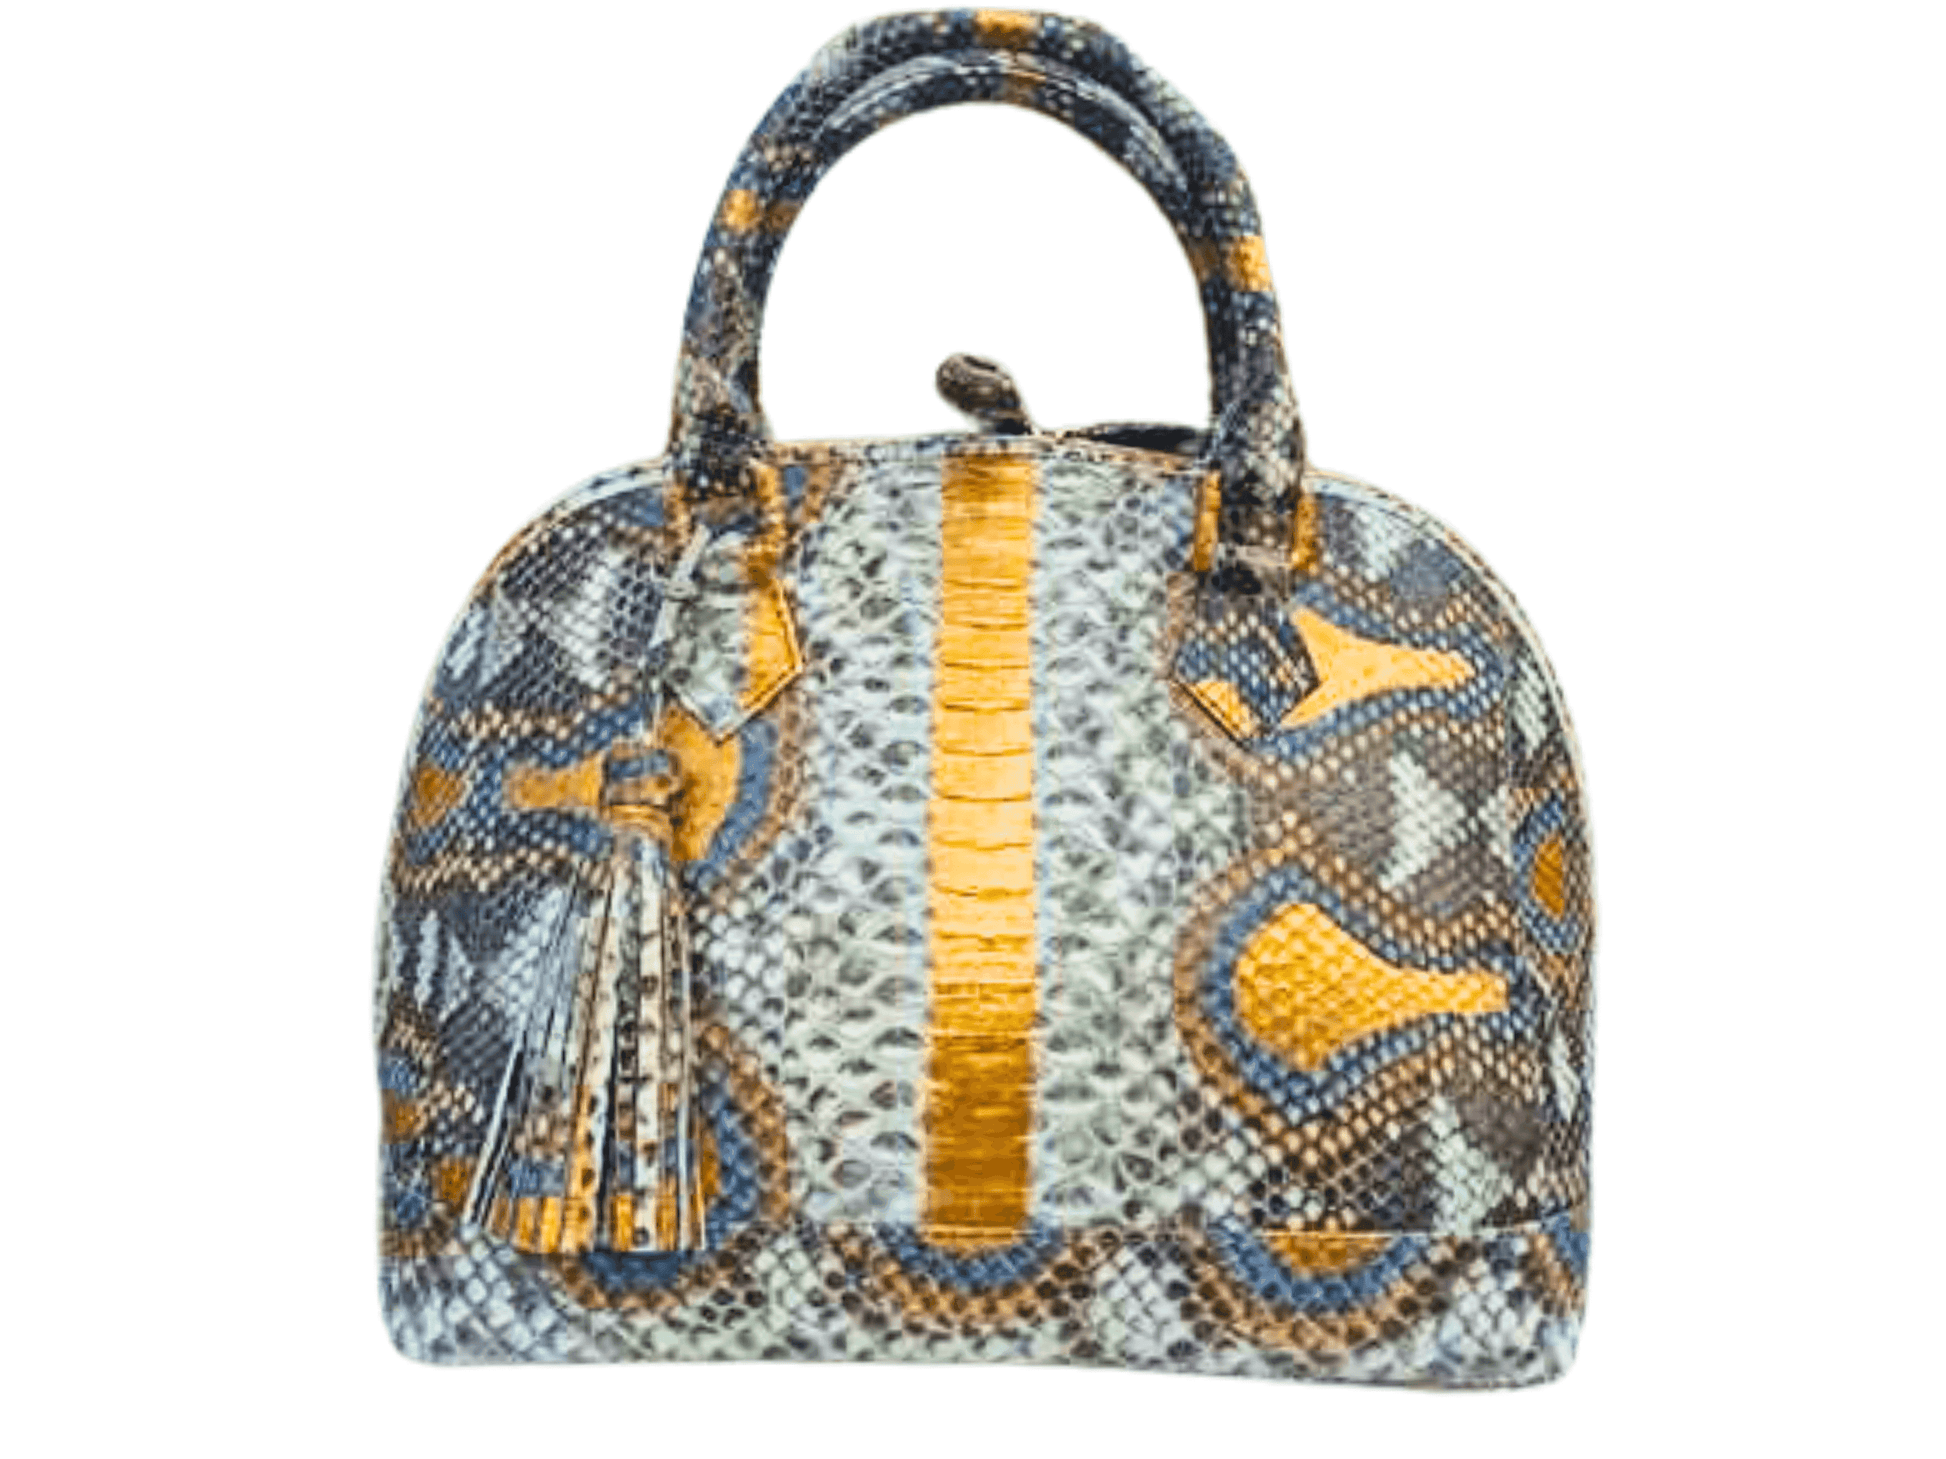 Snakeskin Bowler Bag Gold Python Jacket by LFM Fashion